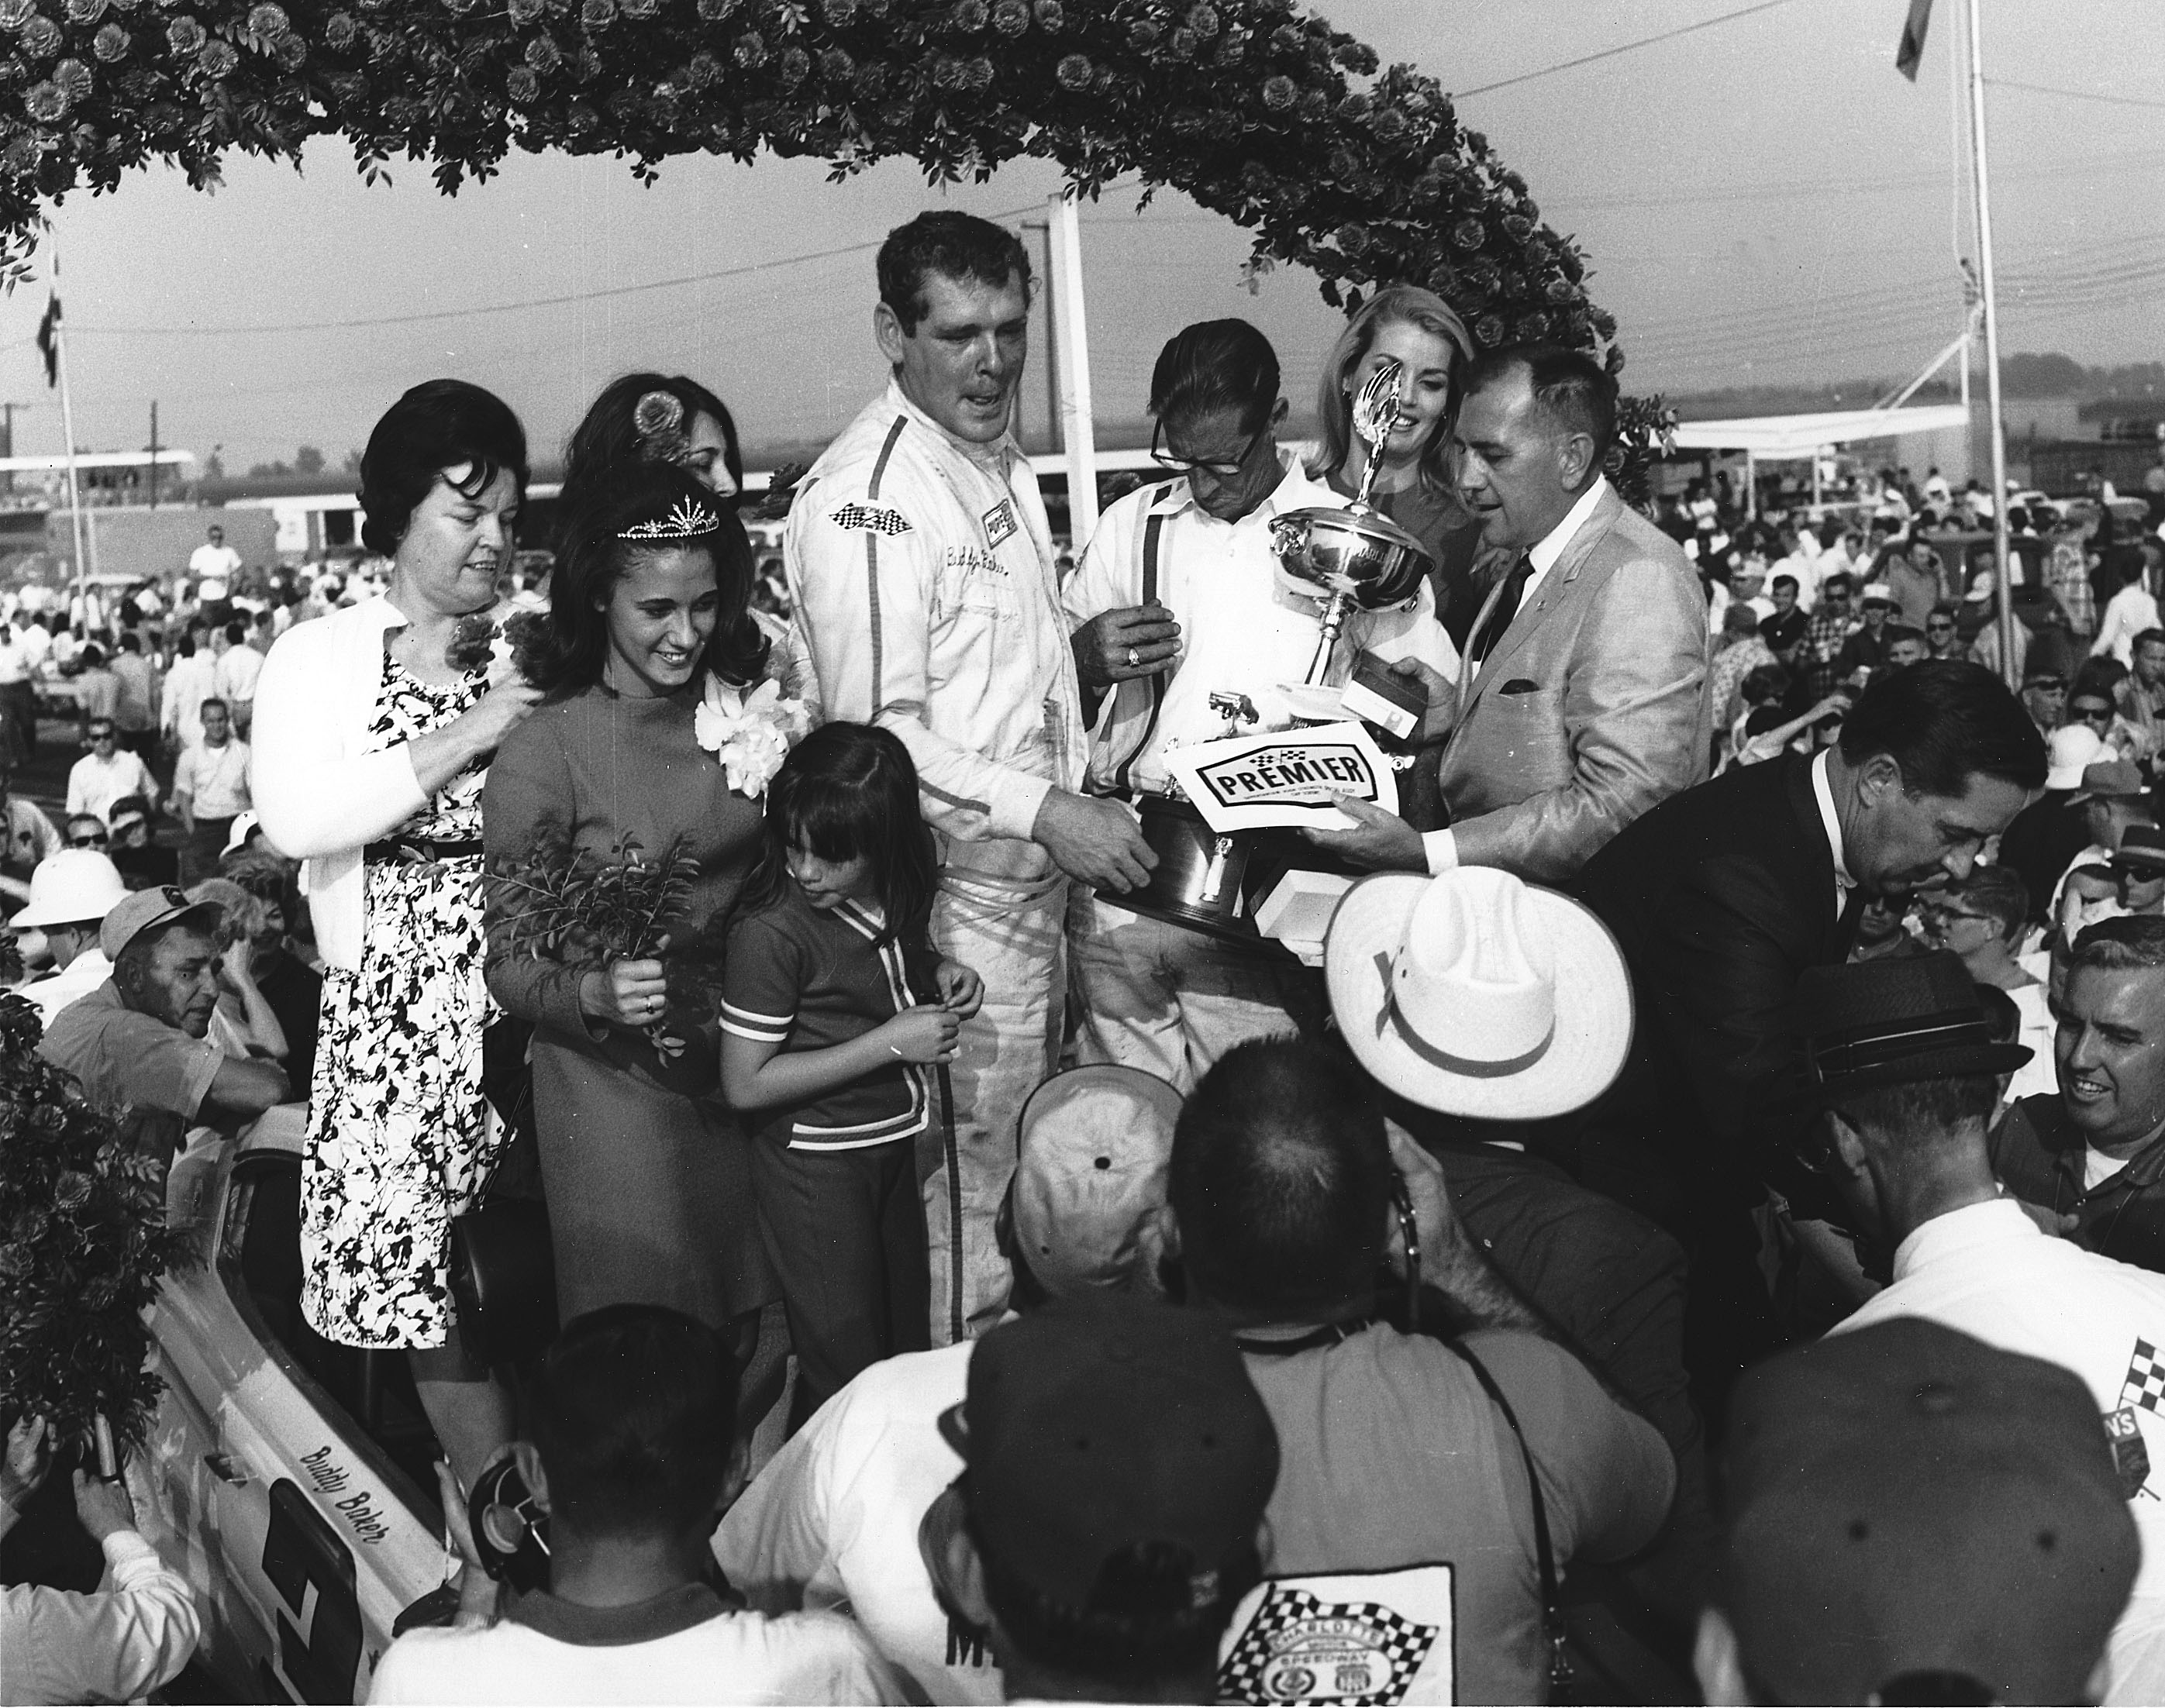 Buddy Baker won the Daytona 500 in 1980.